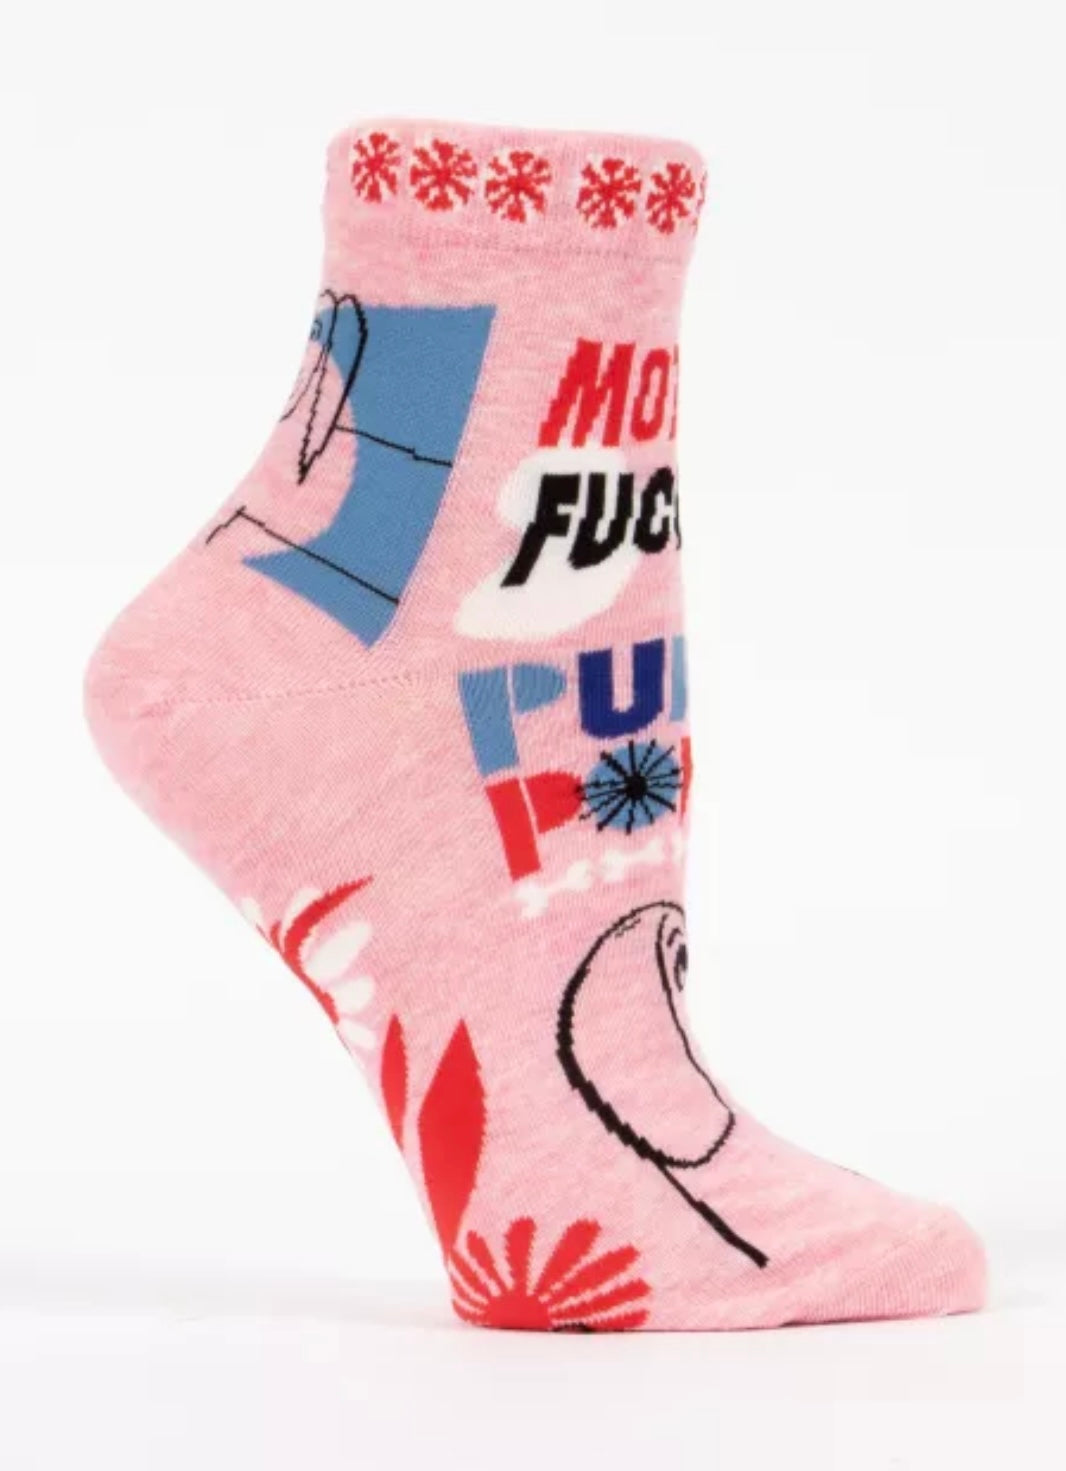 Mother Fucking Puppy Women's Ankle Novelty Blue Q Socks